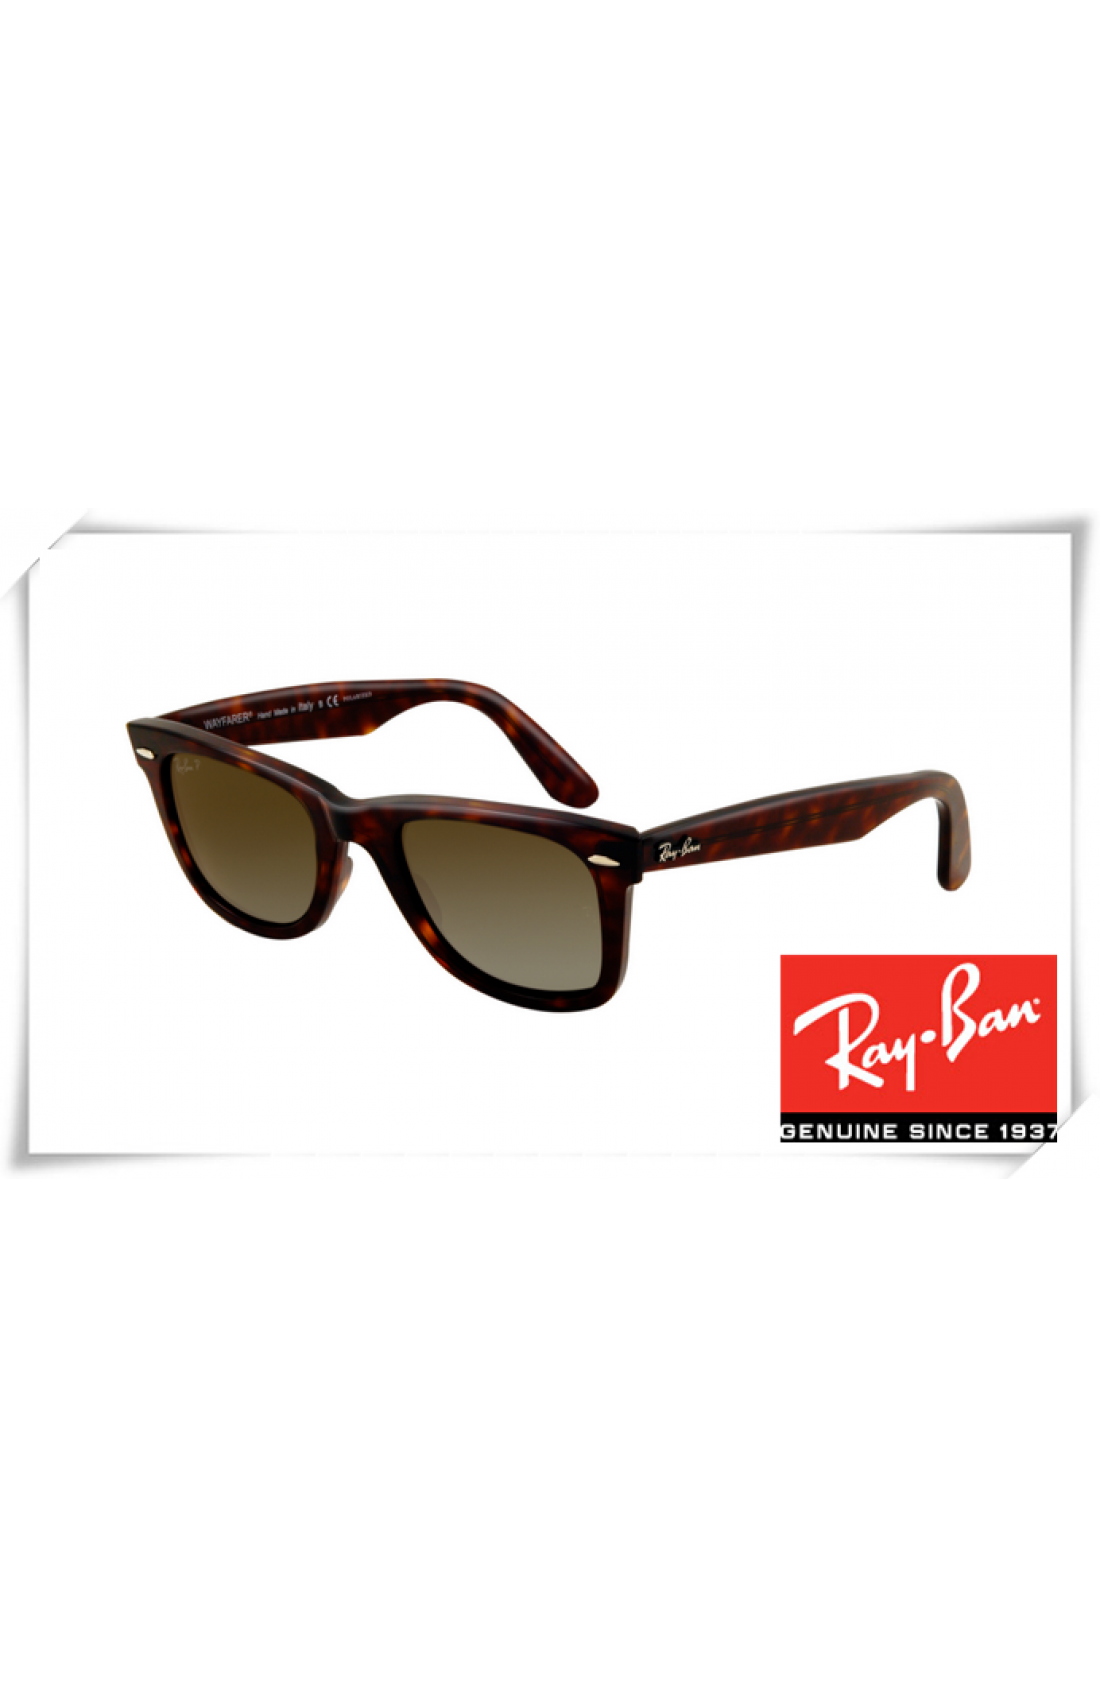 wayfarer sunglasses brown